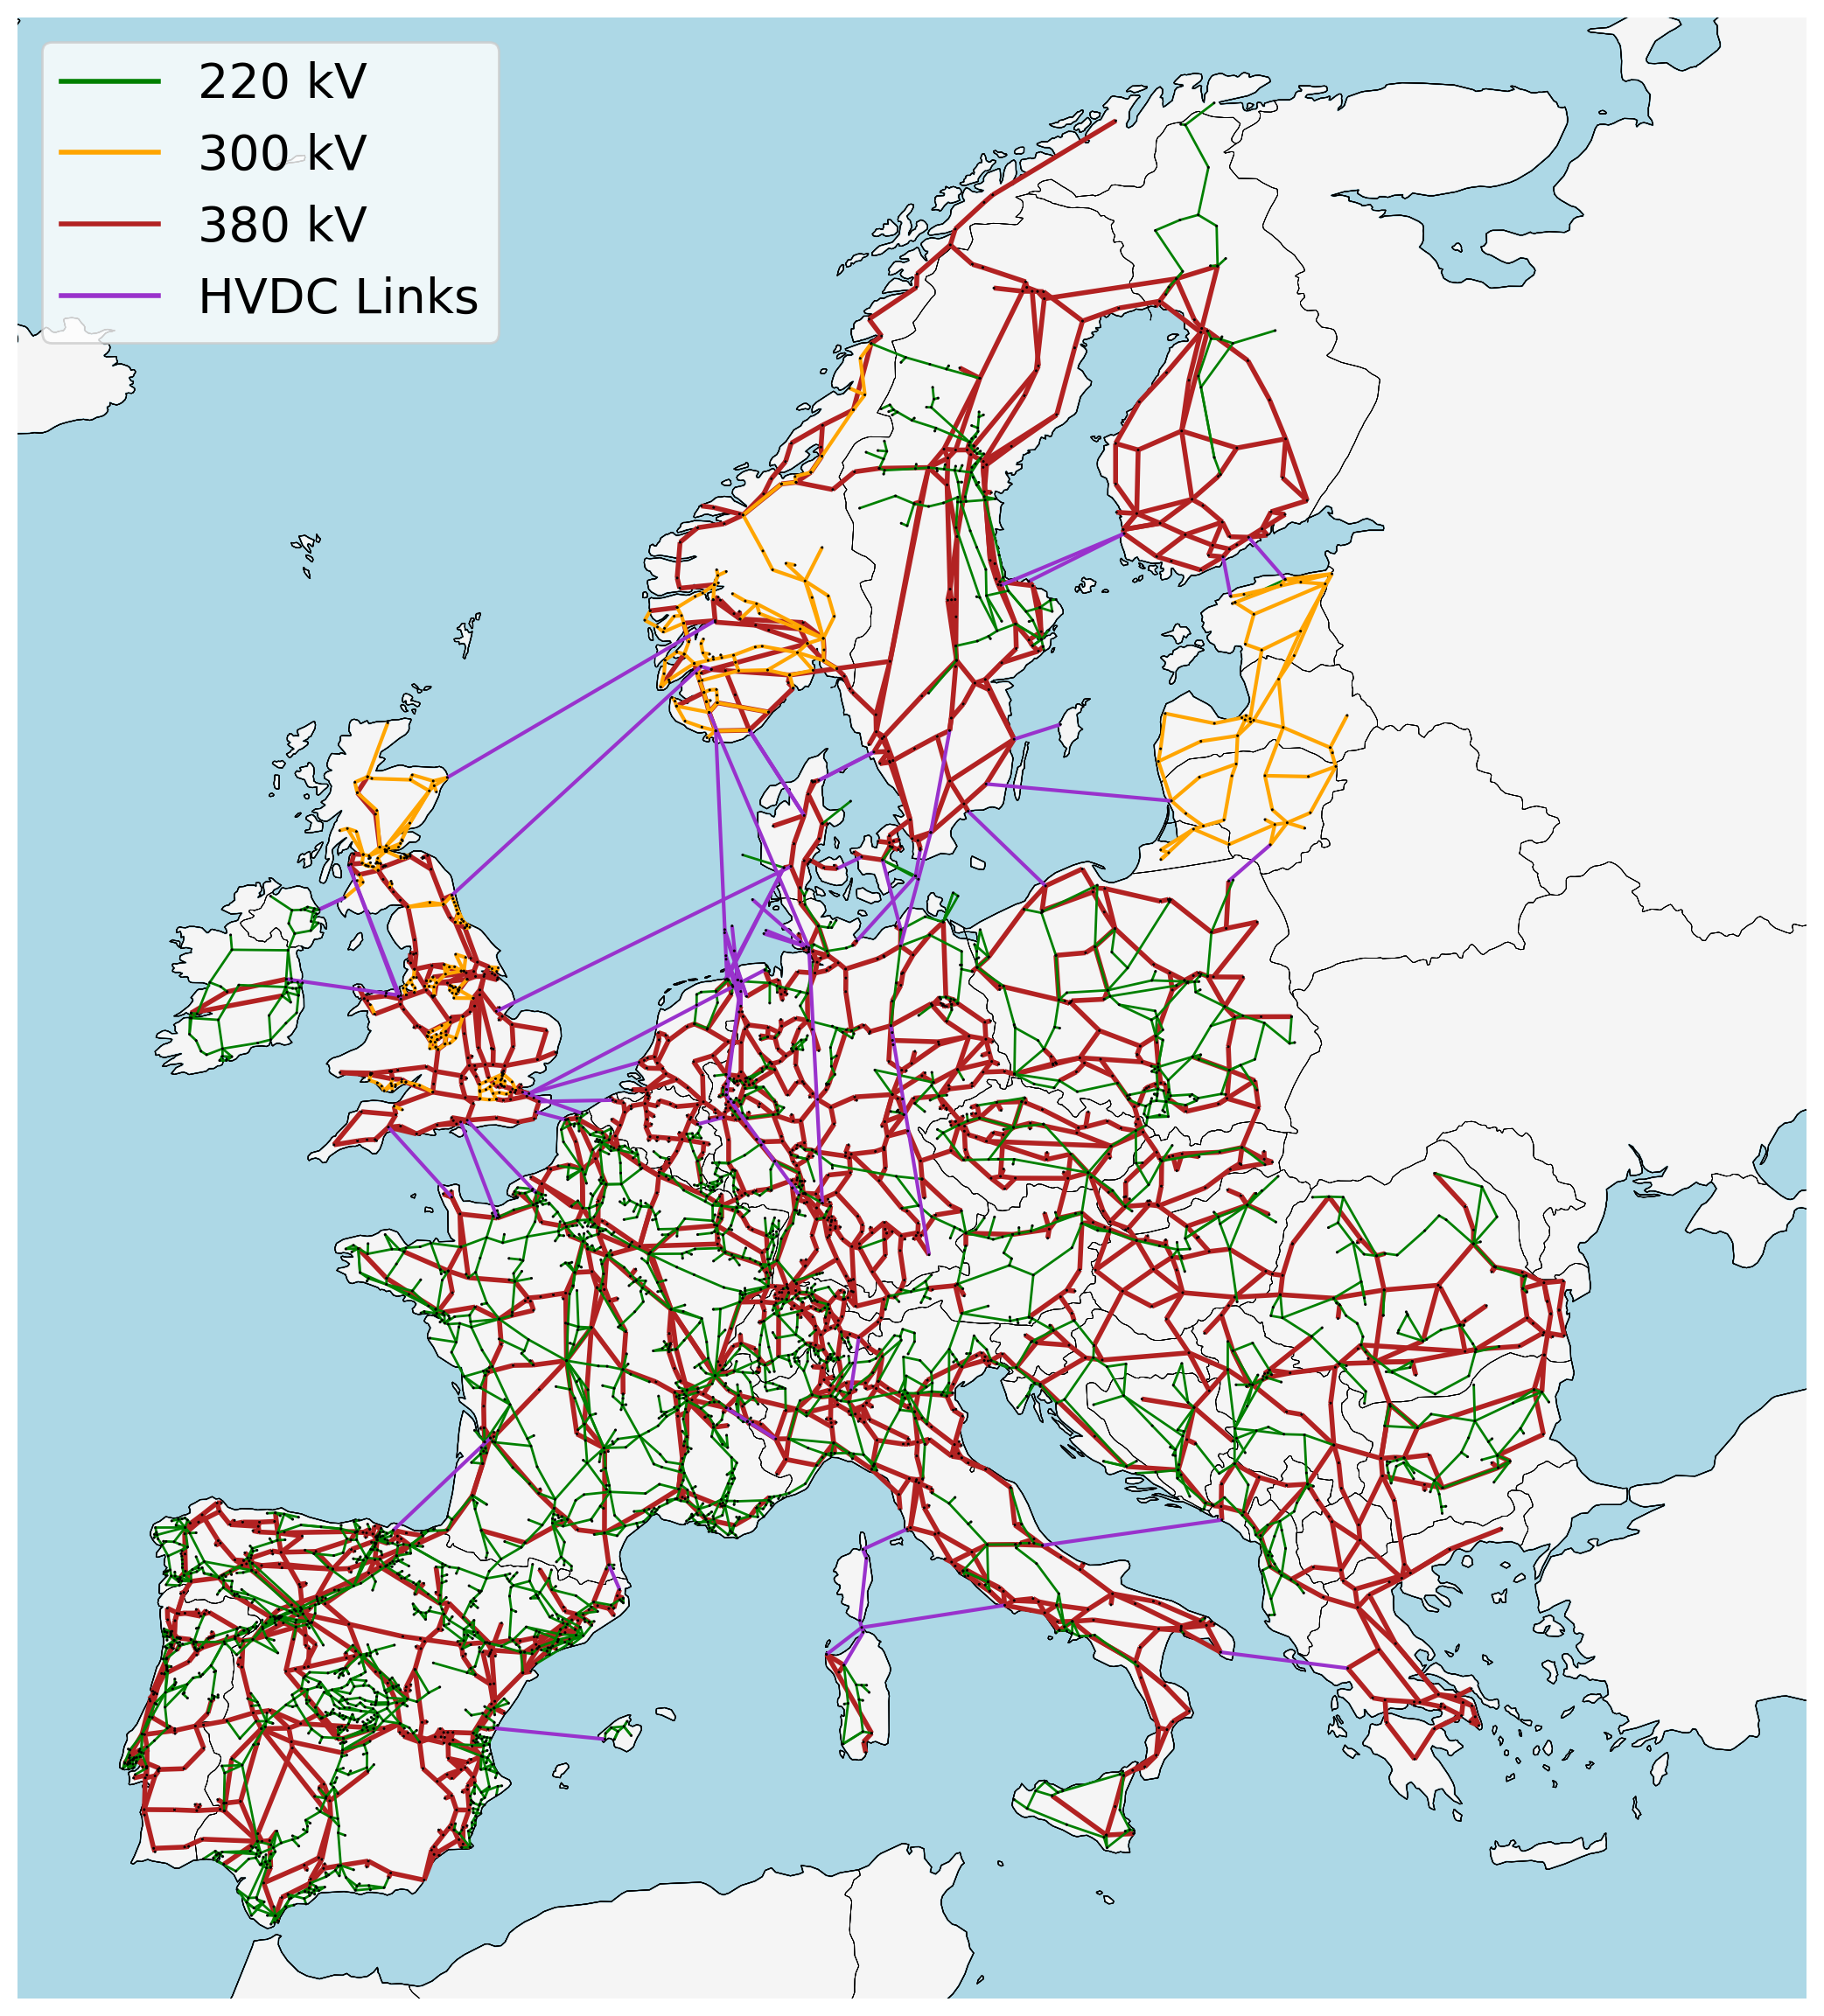 PyPSA-Eur Grid Model